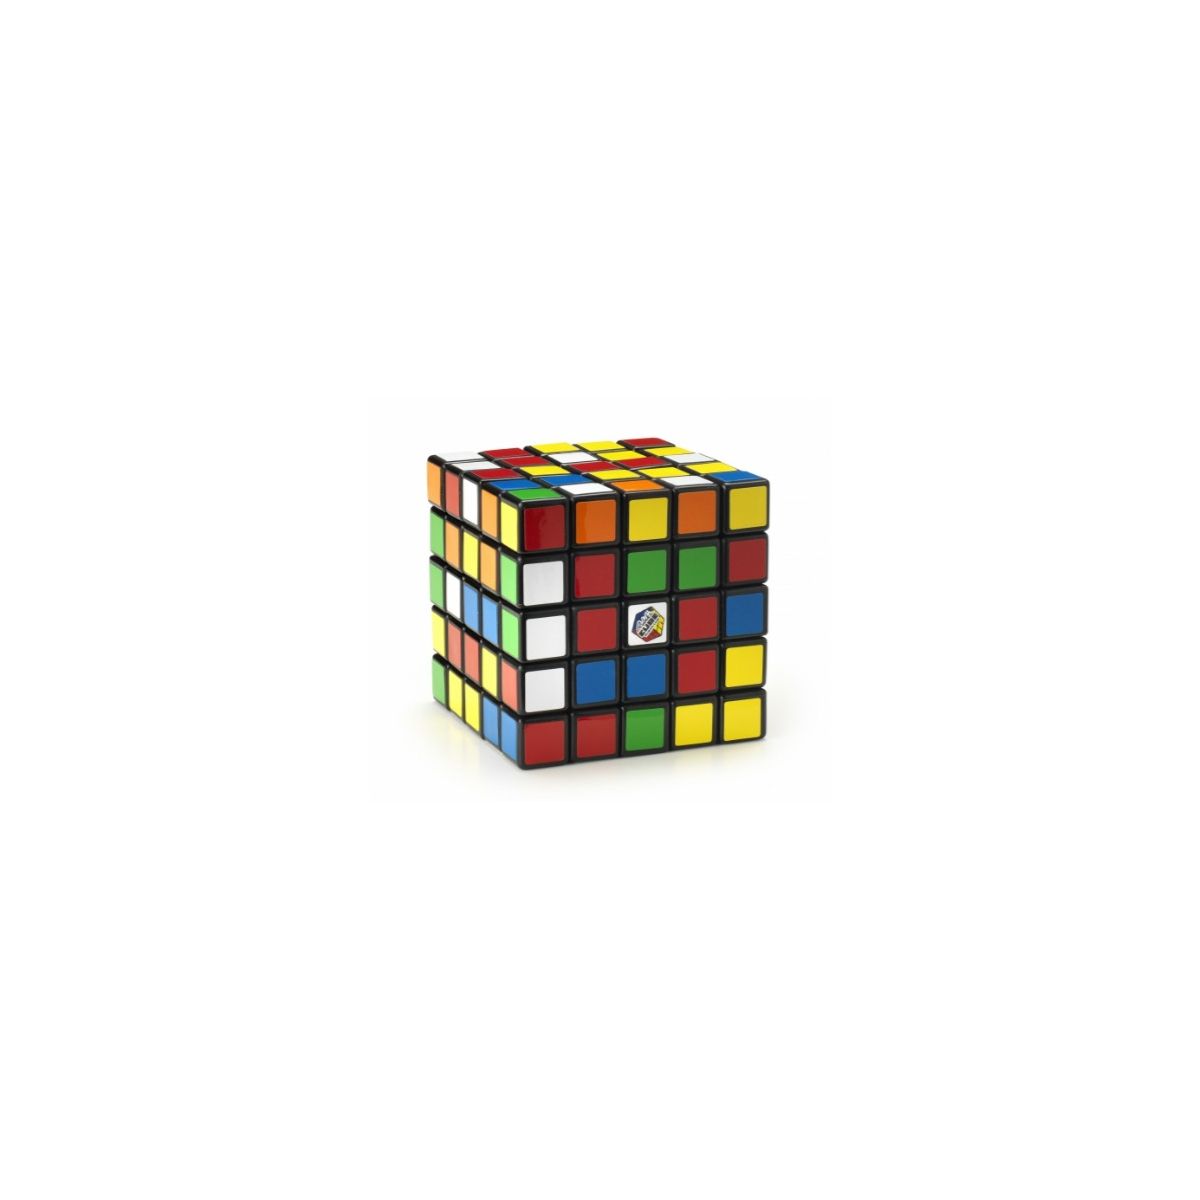 Układanka Spin Master Kostka Rubik Profesor 5x5 (6063978)